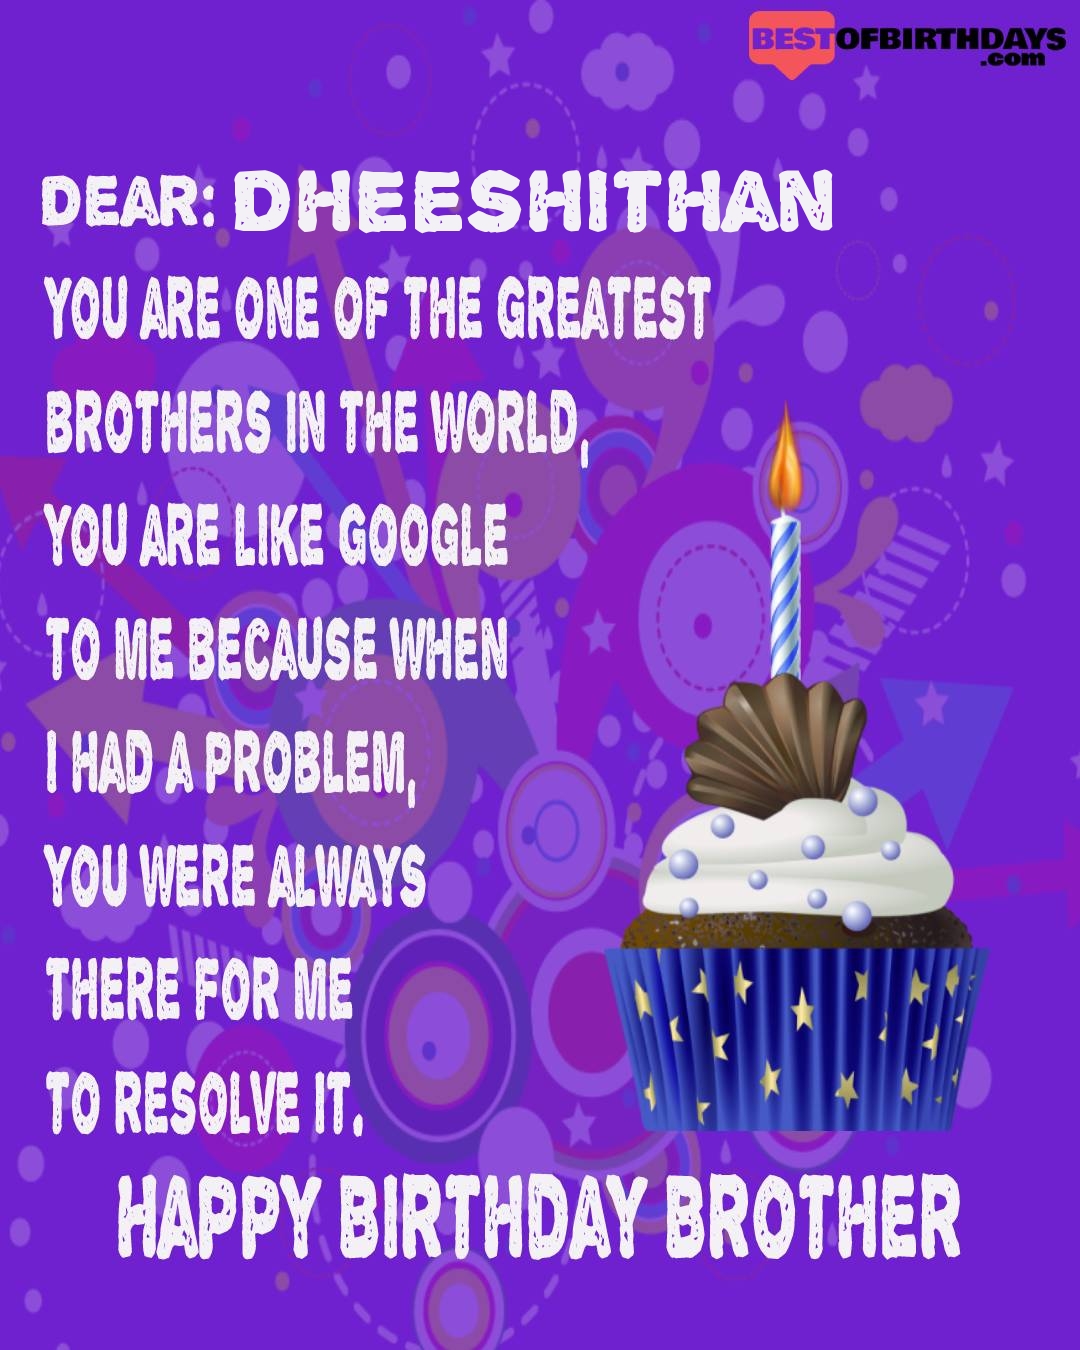 Happy birthday dheeshithan bhai brother bro